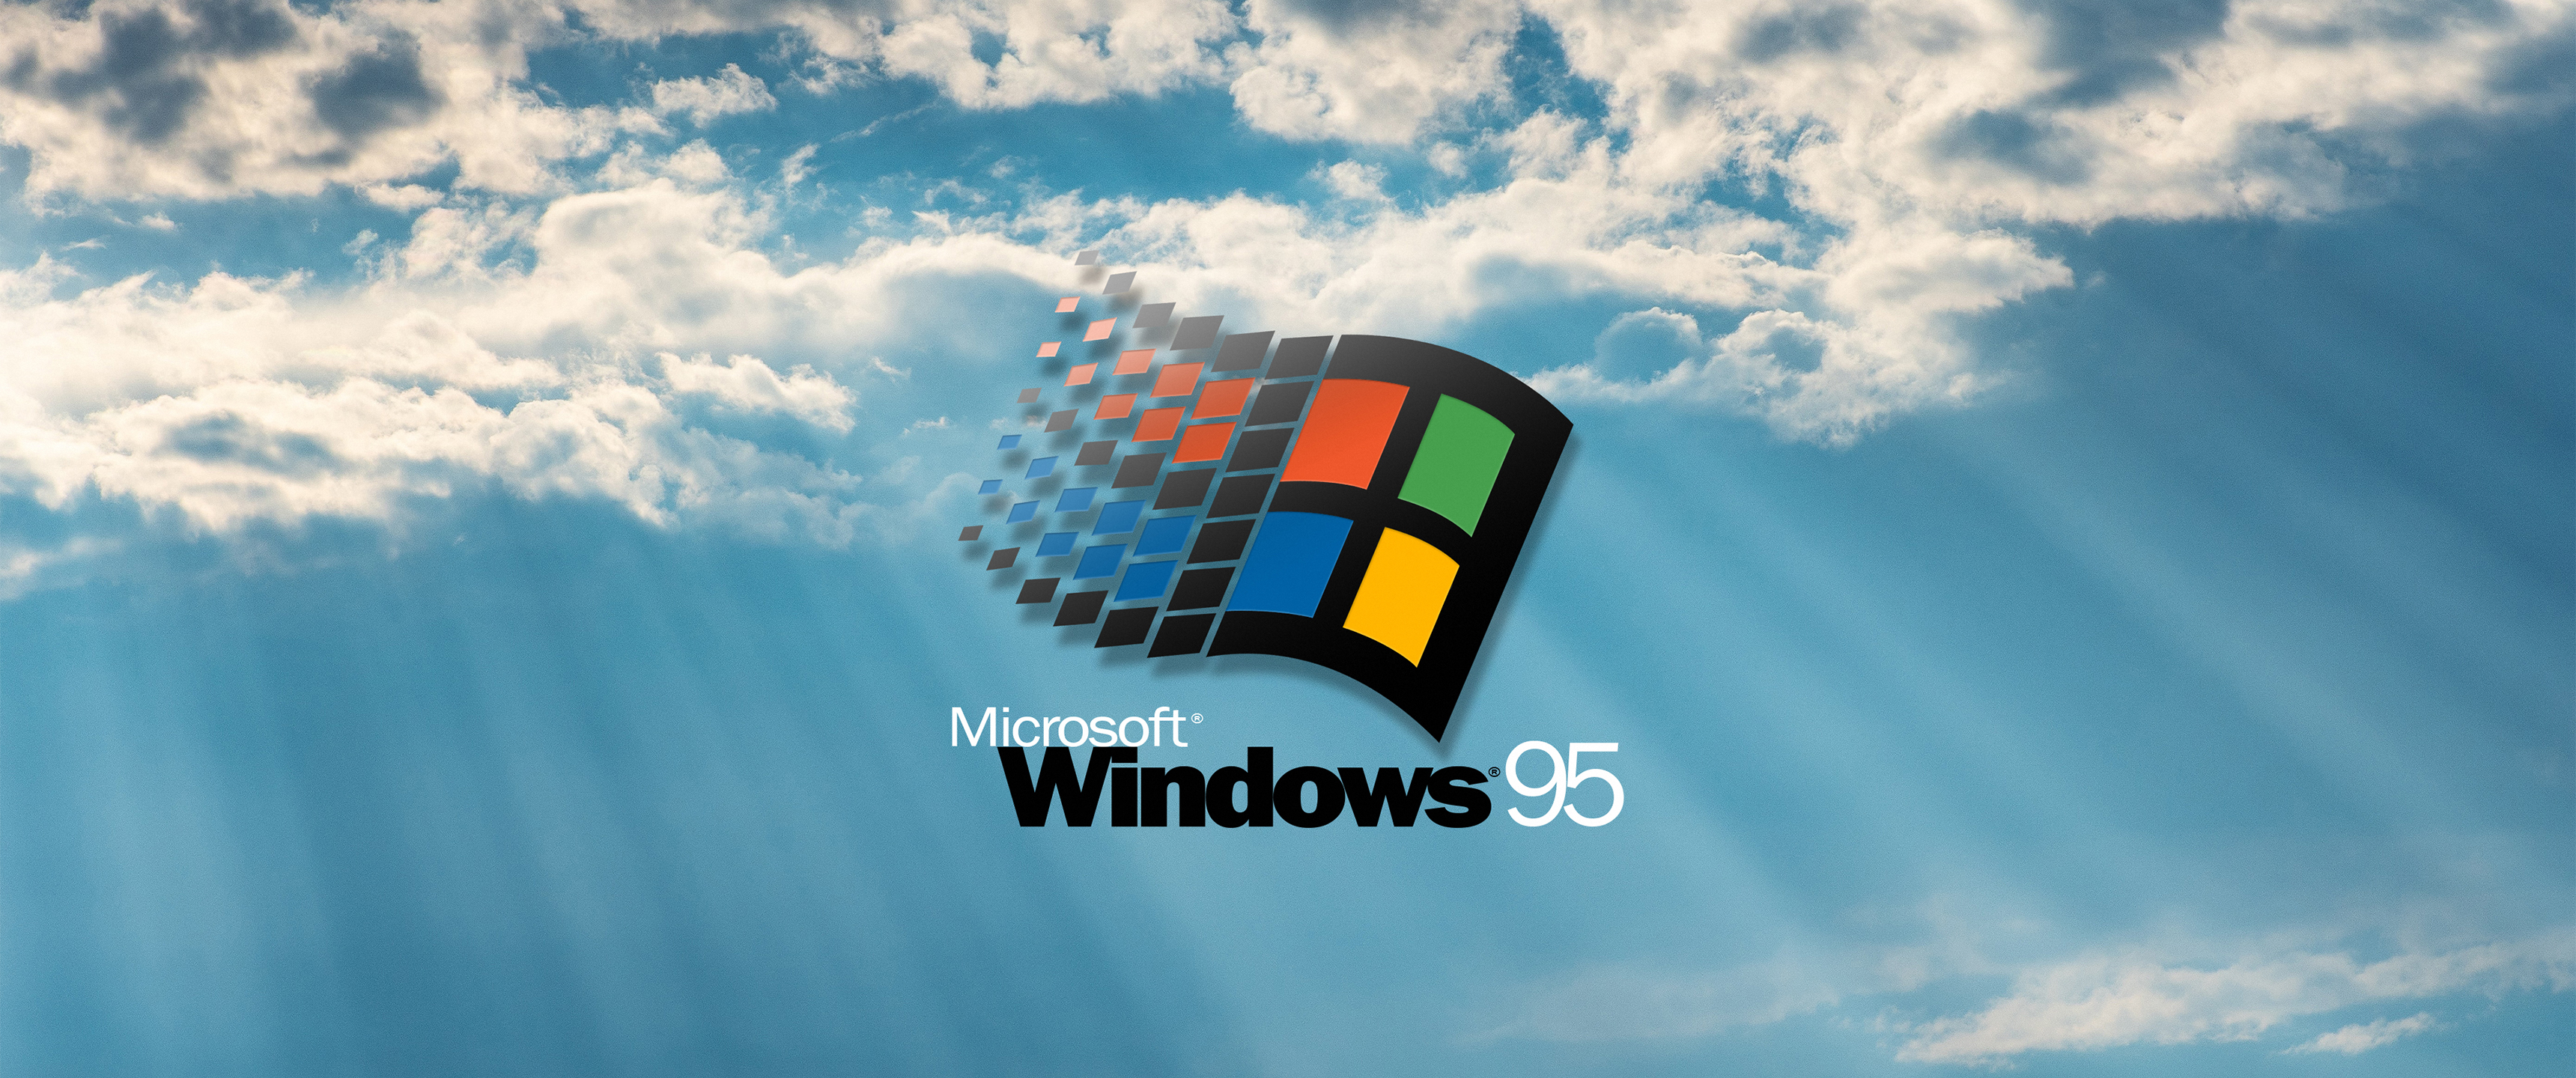 Windows 95 Microsoft Ultrawide Operating System Clouds 3440x1440